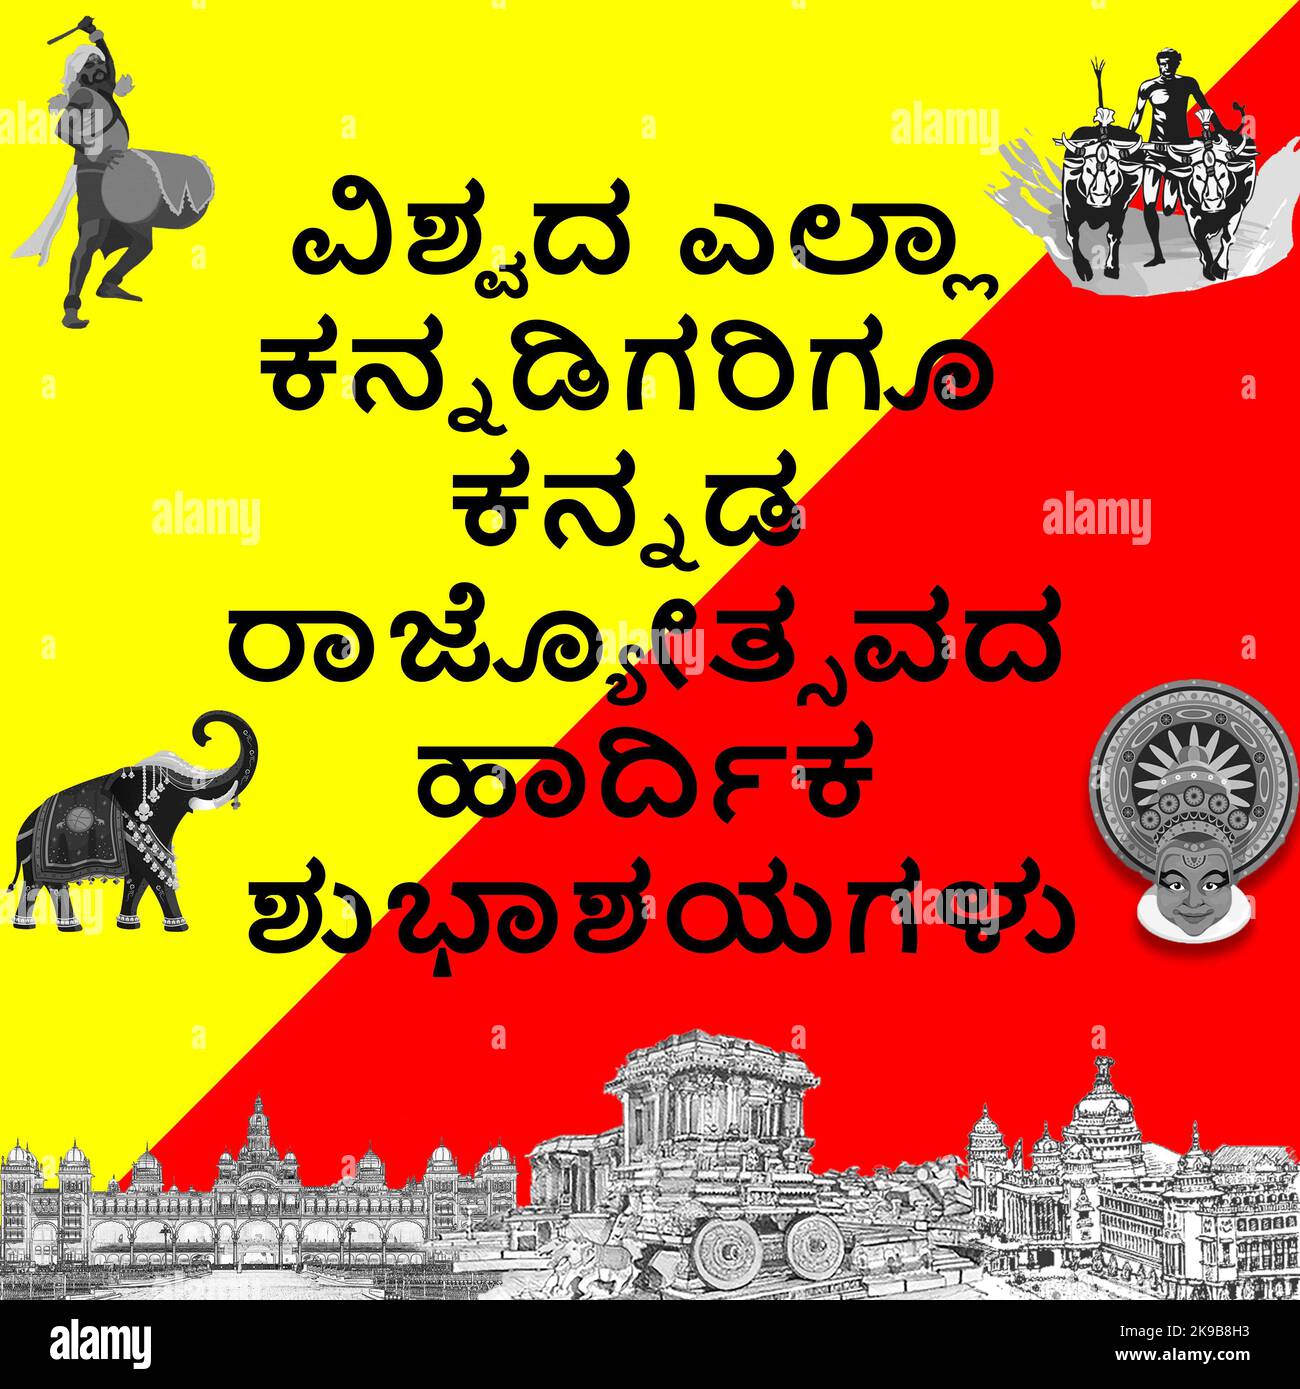 Kannada Rajyotsava saluti con Karnataka bandiera colore contenente riferimenti culturali. Il testo si traduce in felice Kannada Rajyotsava a tutti Kannadigas Foto Stock